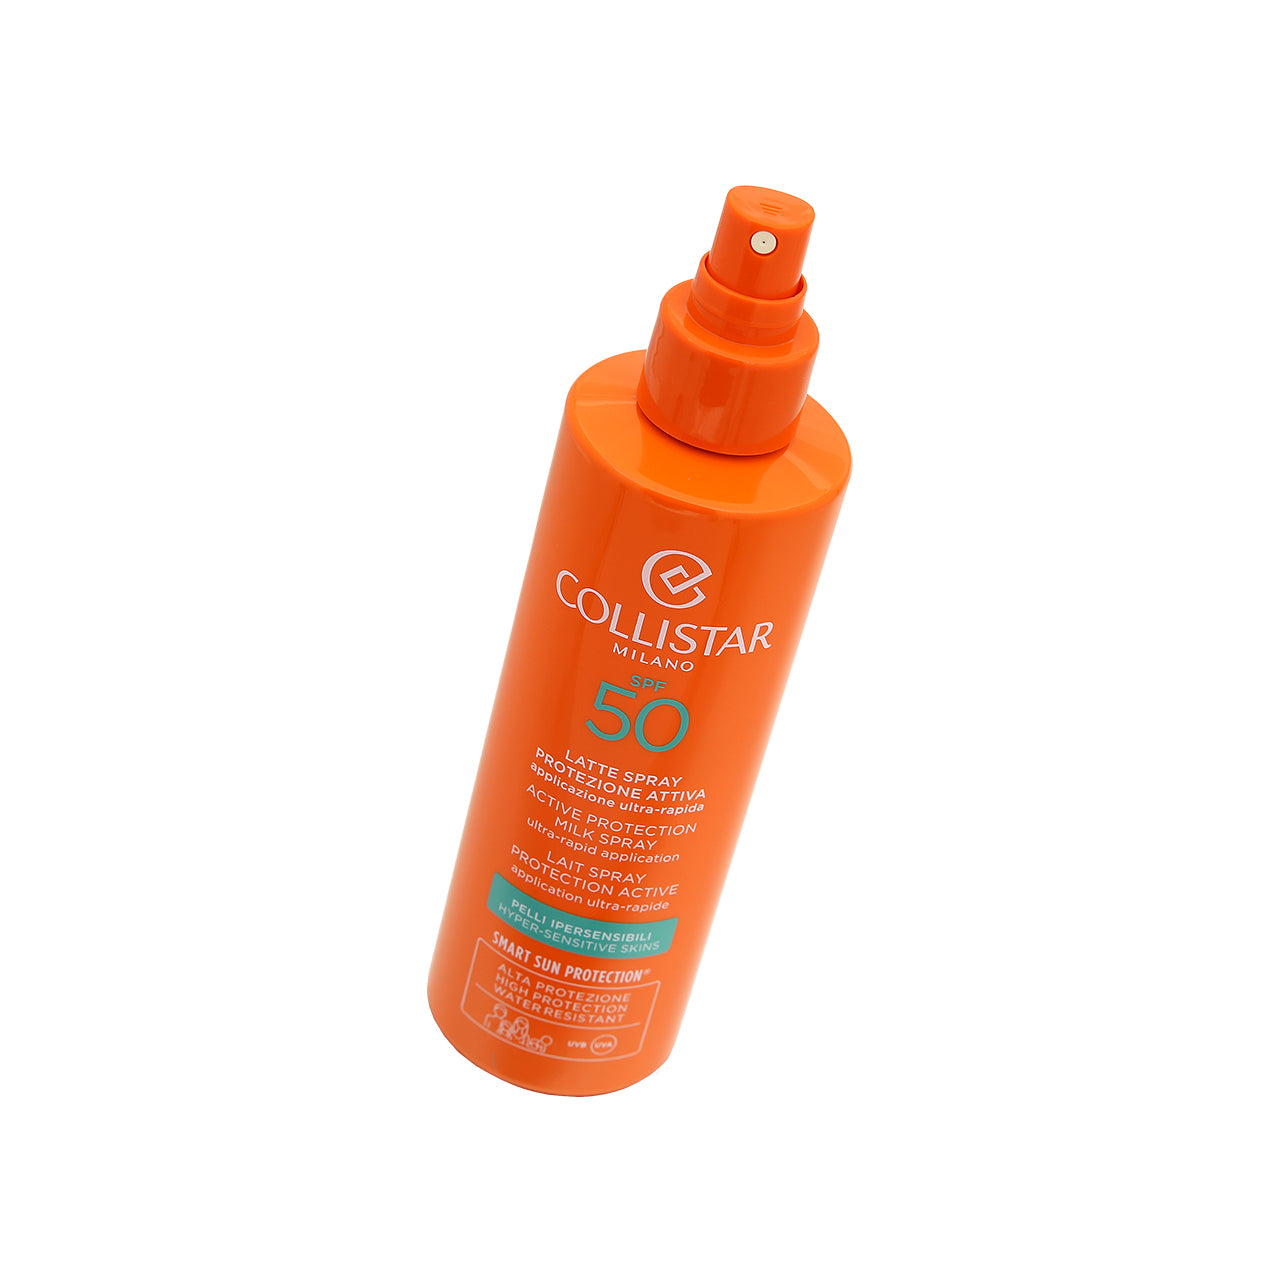 Collistar Active Protection Milk Spray Hyper-Sensitive Skins SPF50 200ml | Sasa Global eShop